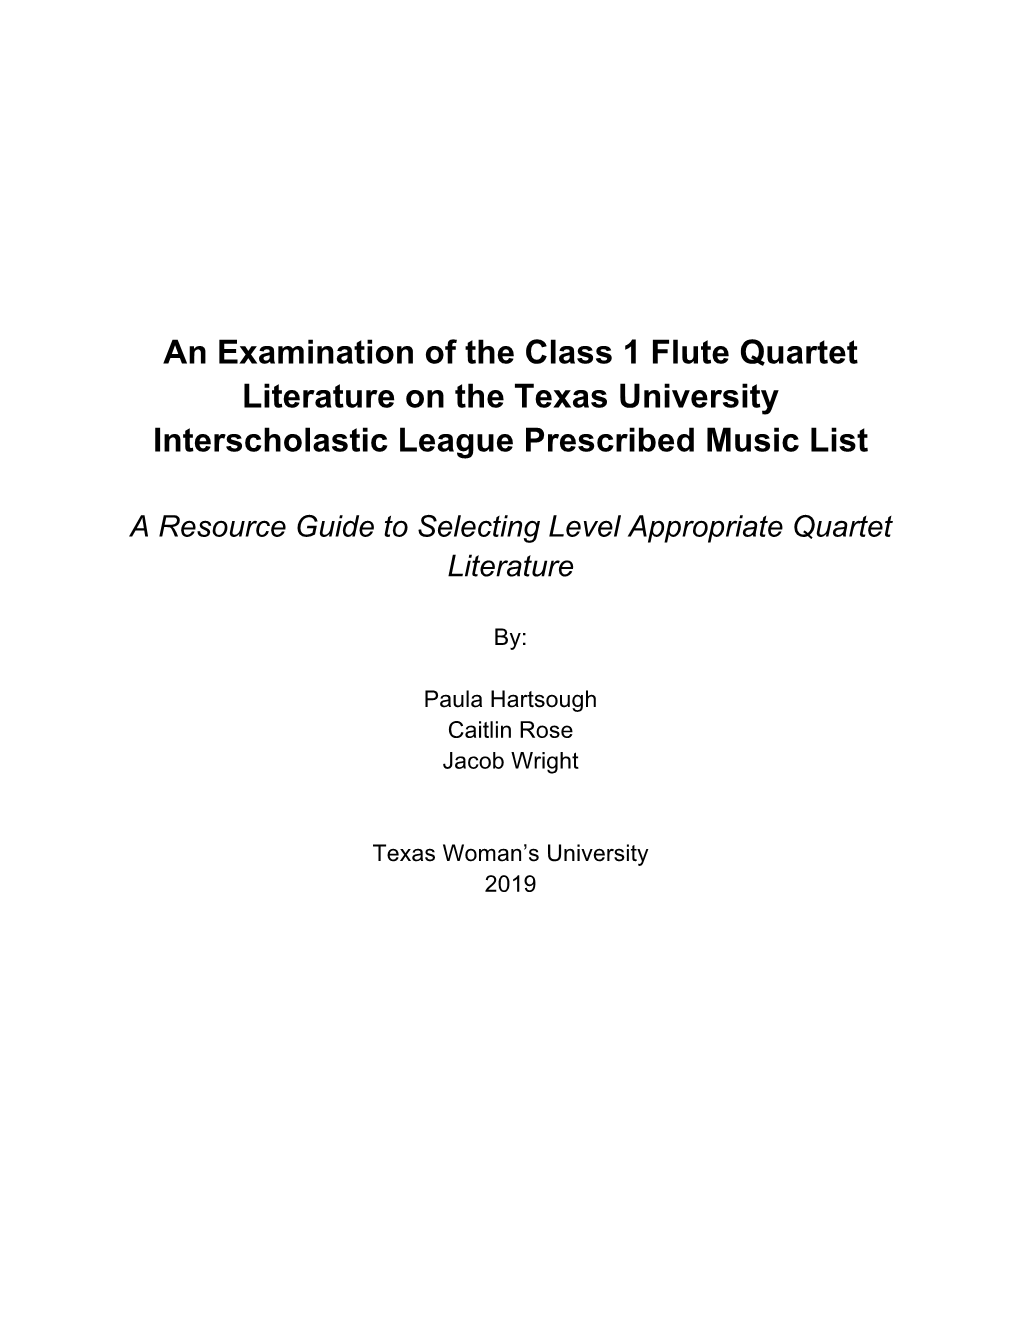 An Examination of the Class 1 Flute Quartet Literature on the Texas University Interscholastic League Prescribed Music List